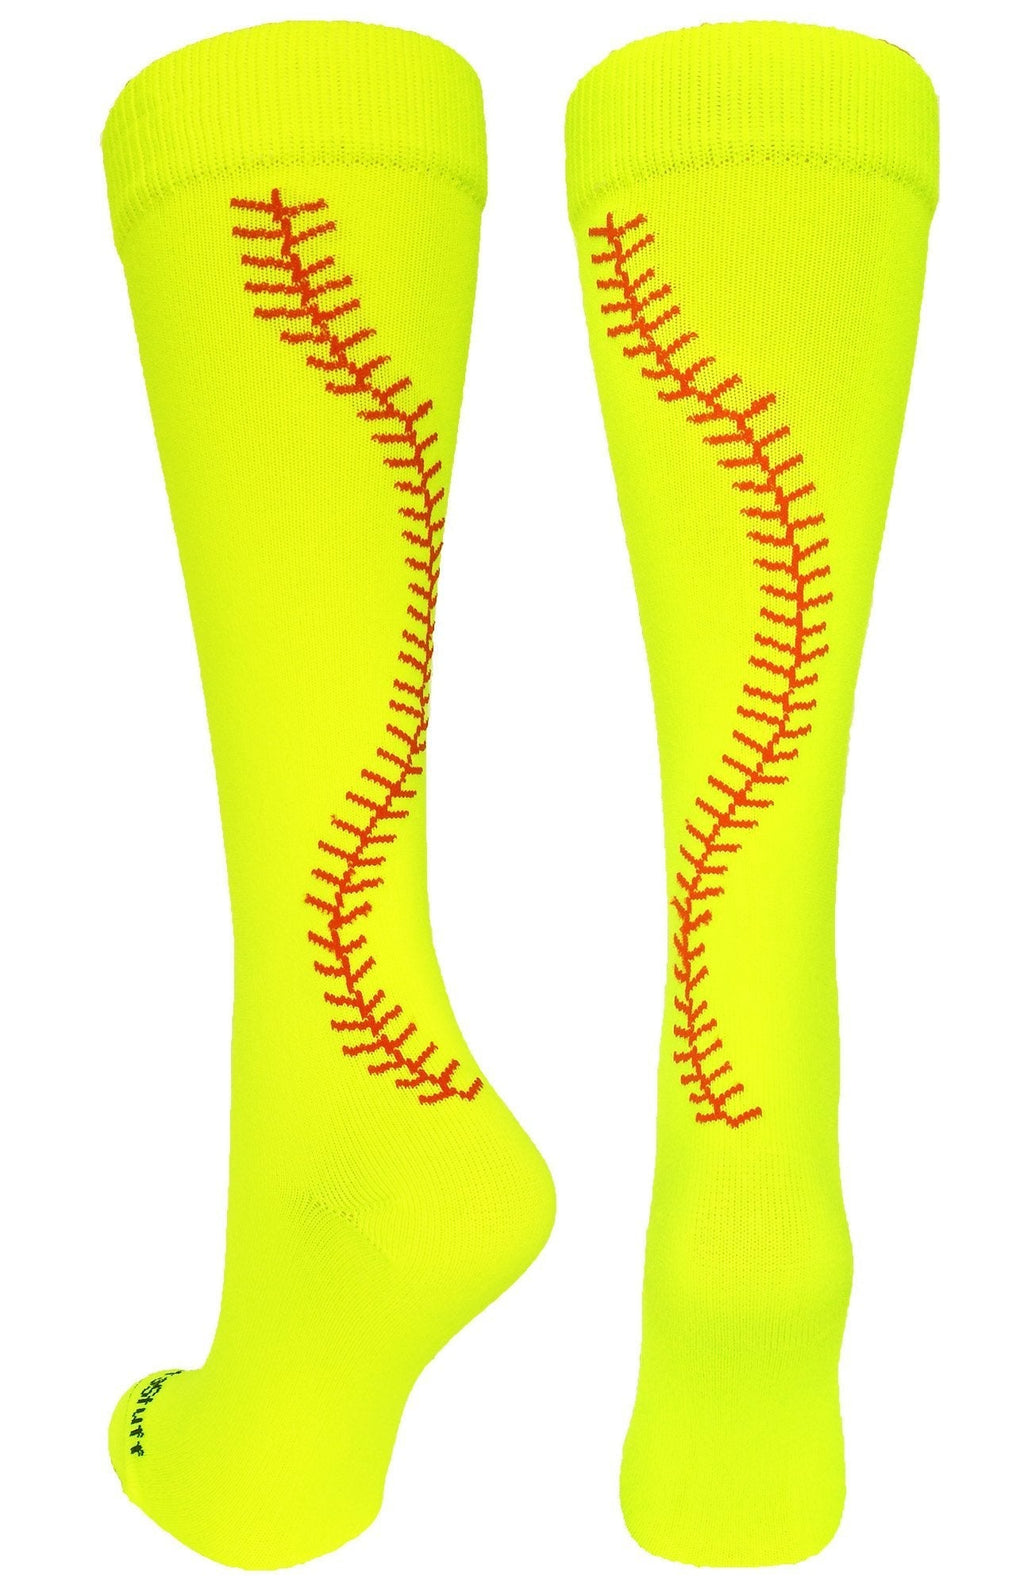 [AUSTRALIA] - MadSportsStuff Softball Socks with Stitches Over The Calf (Multiple Colors) Neon Yellow/Red Medium 